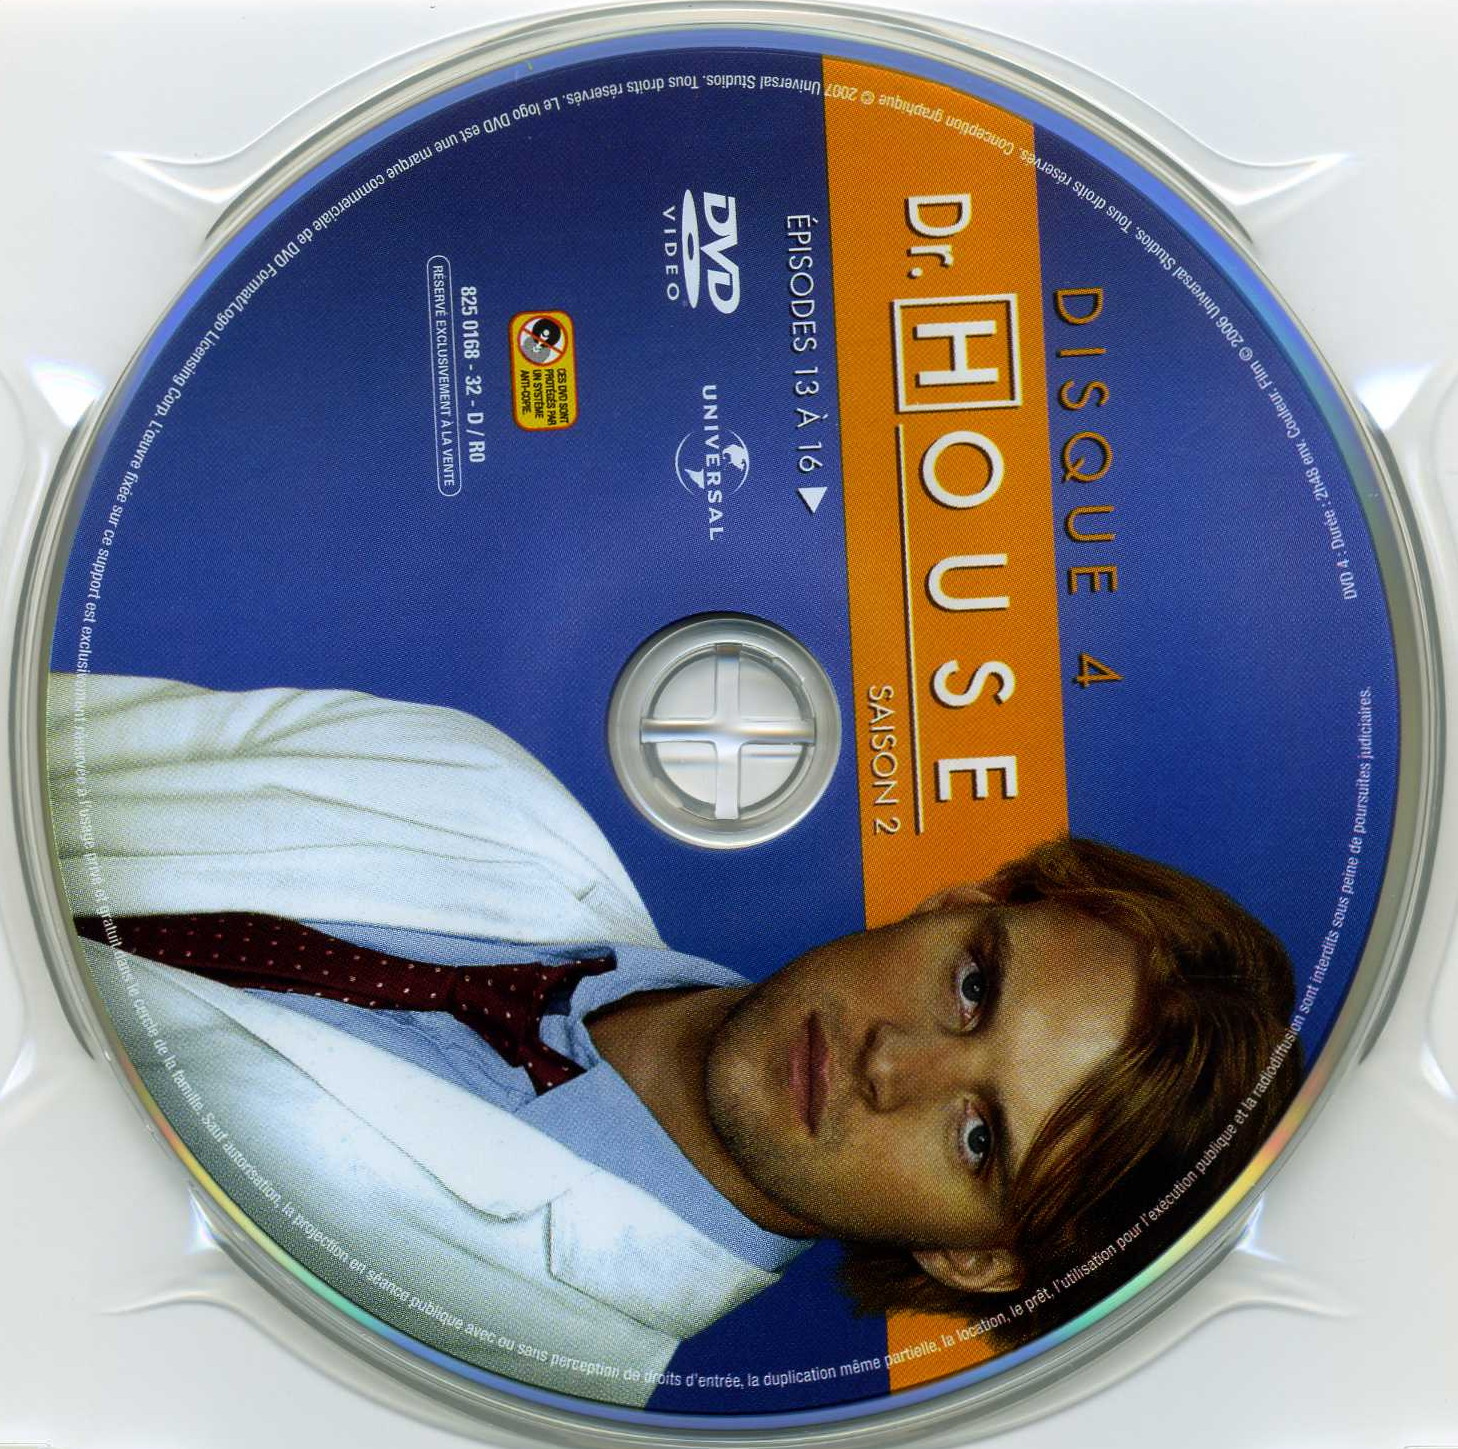 Dr House Saison 2 DVD 4